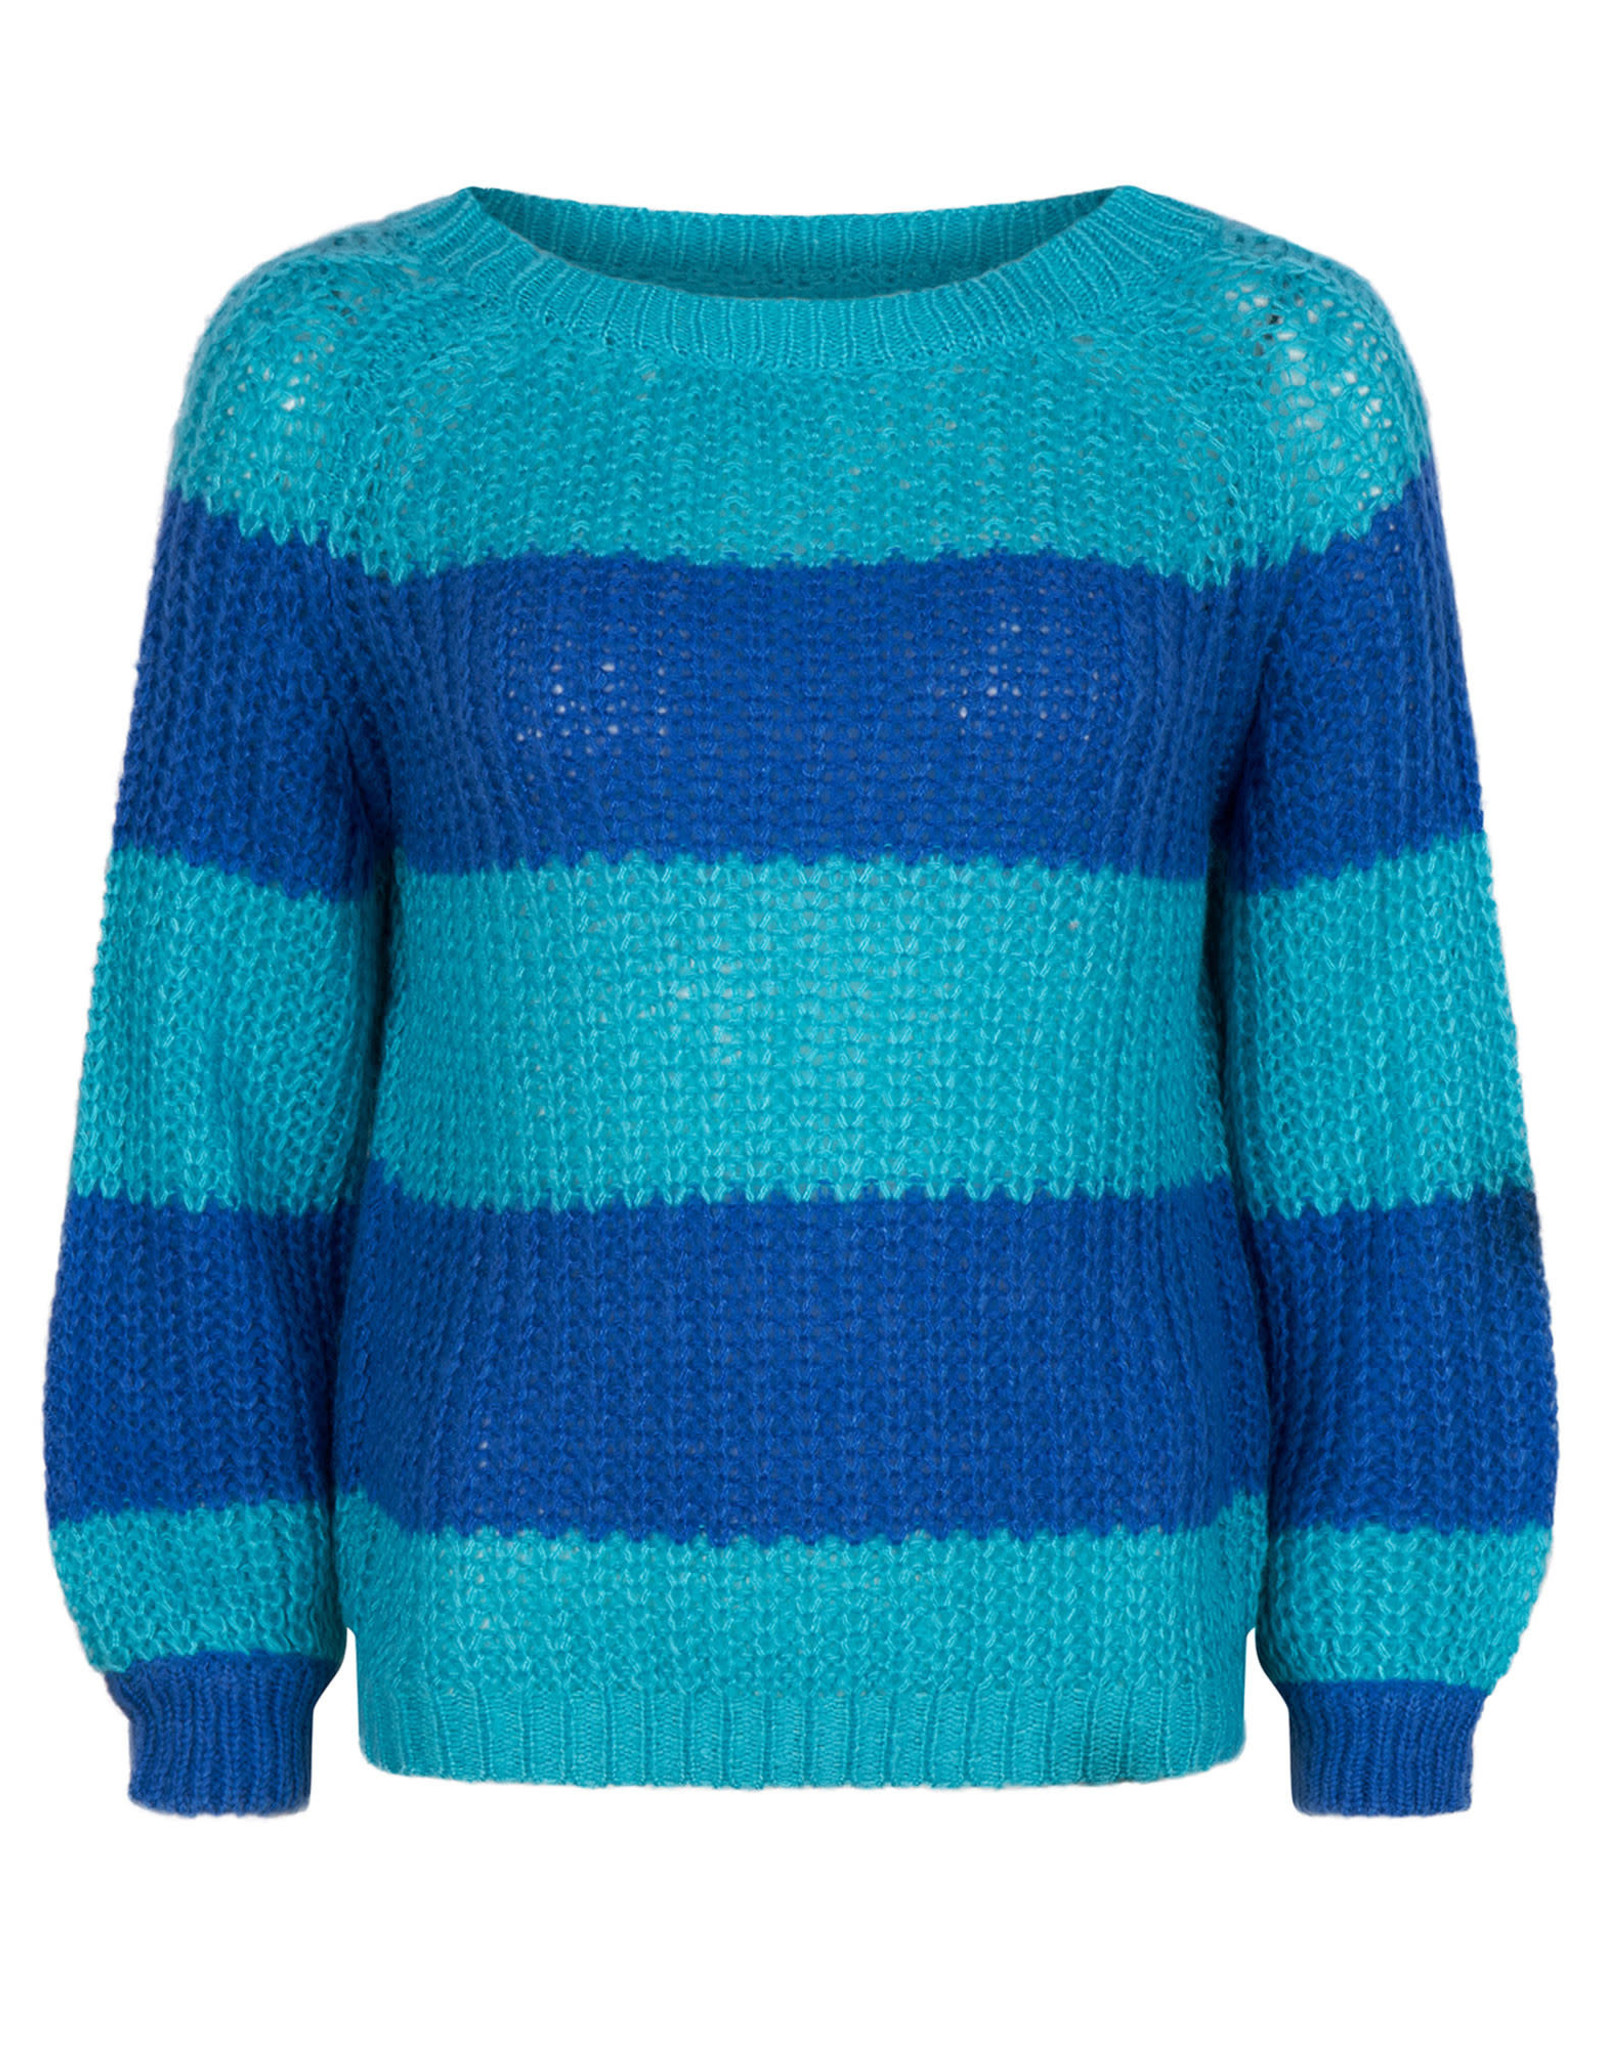 YDENCE Knitted sweater Frankie - Blue & dark blue